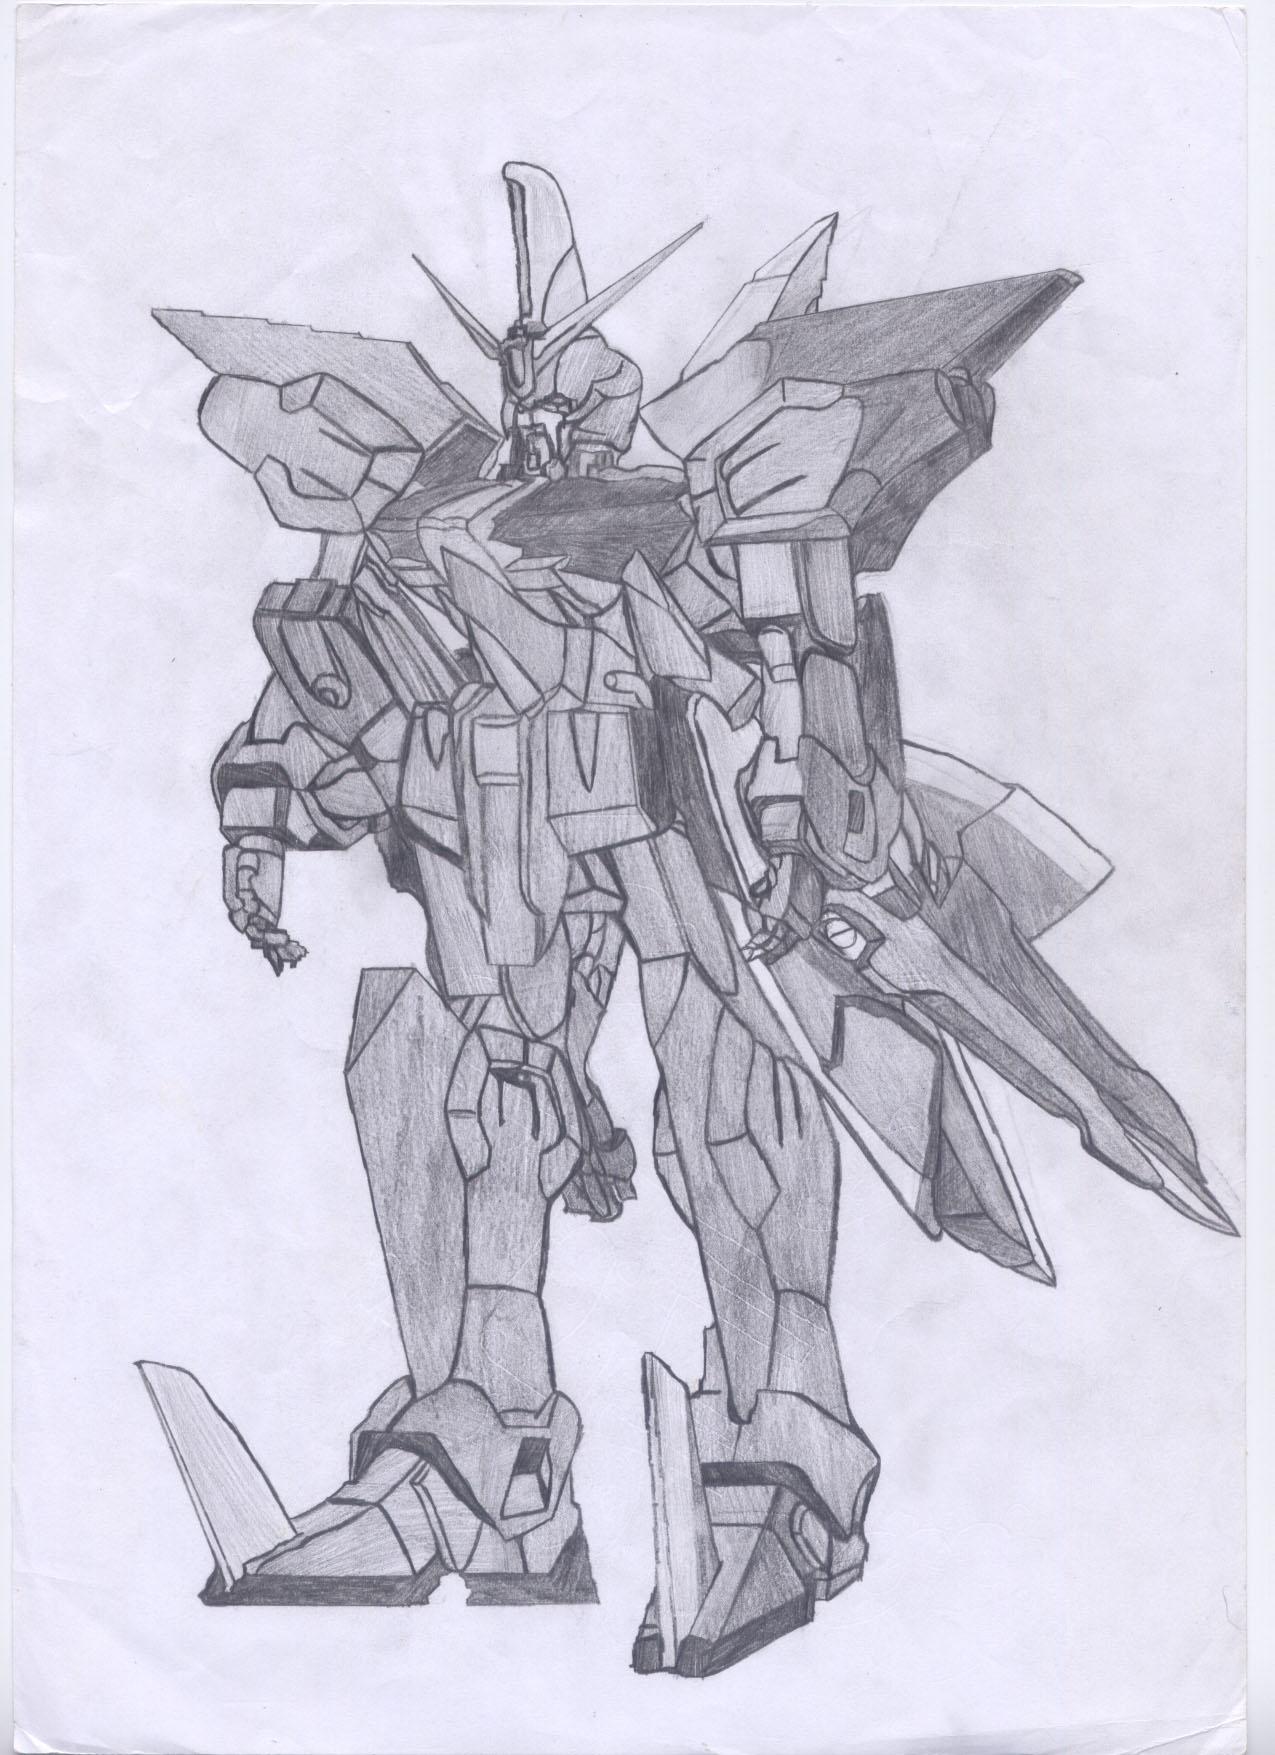 GAT-X303 Aegis Gundam by Smiley_Menace